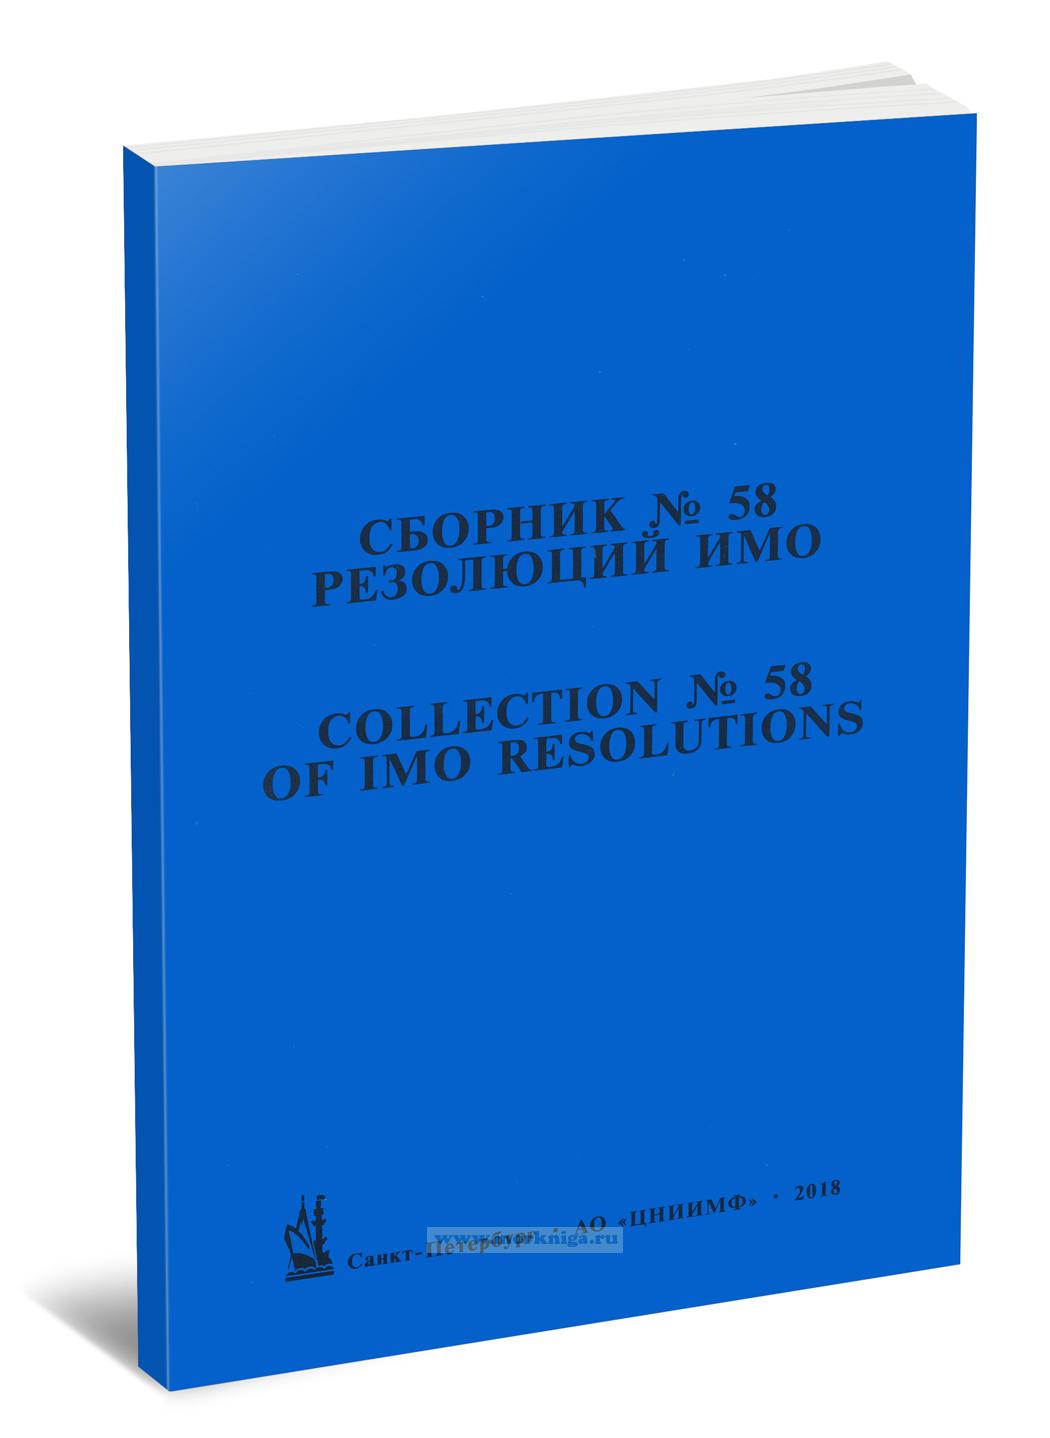 Сборник № 58 резолюций ИМО/ Collection No.58 of IMO Resolutions